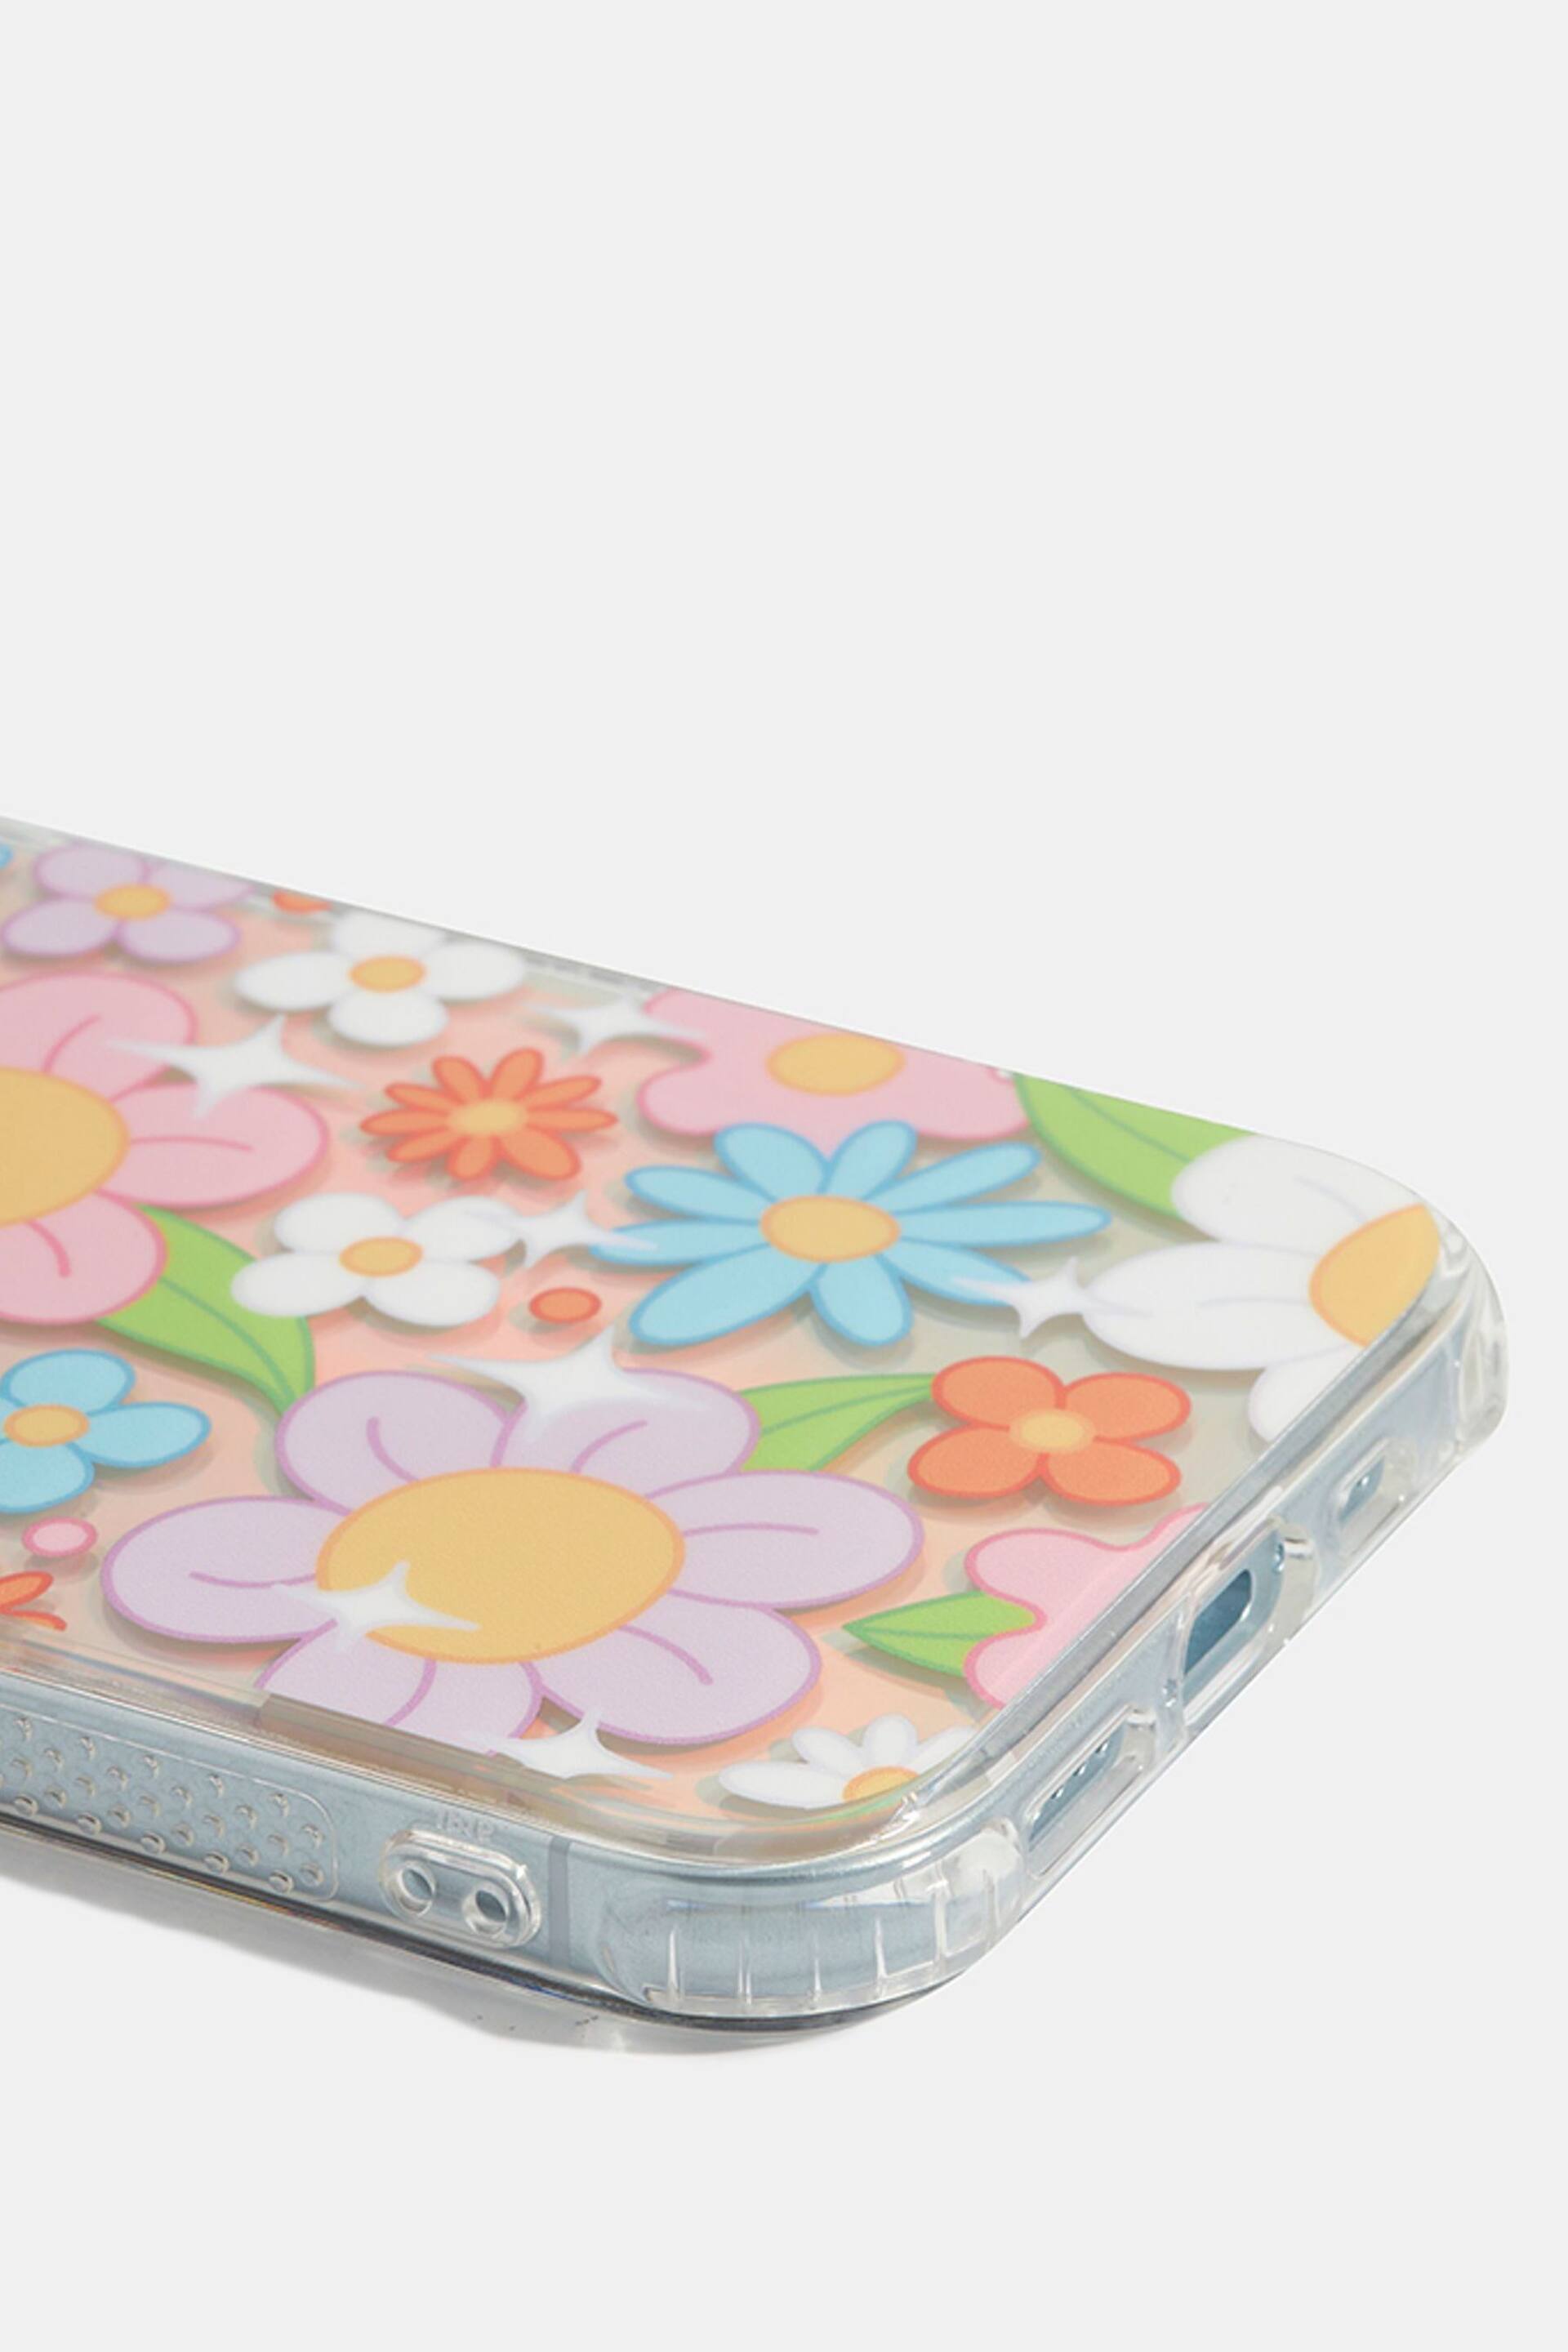 Skinnydip Retro Holo Flower London x Disney 15 Pro Max Case - Image 3 of 4